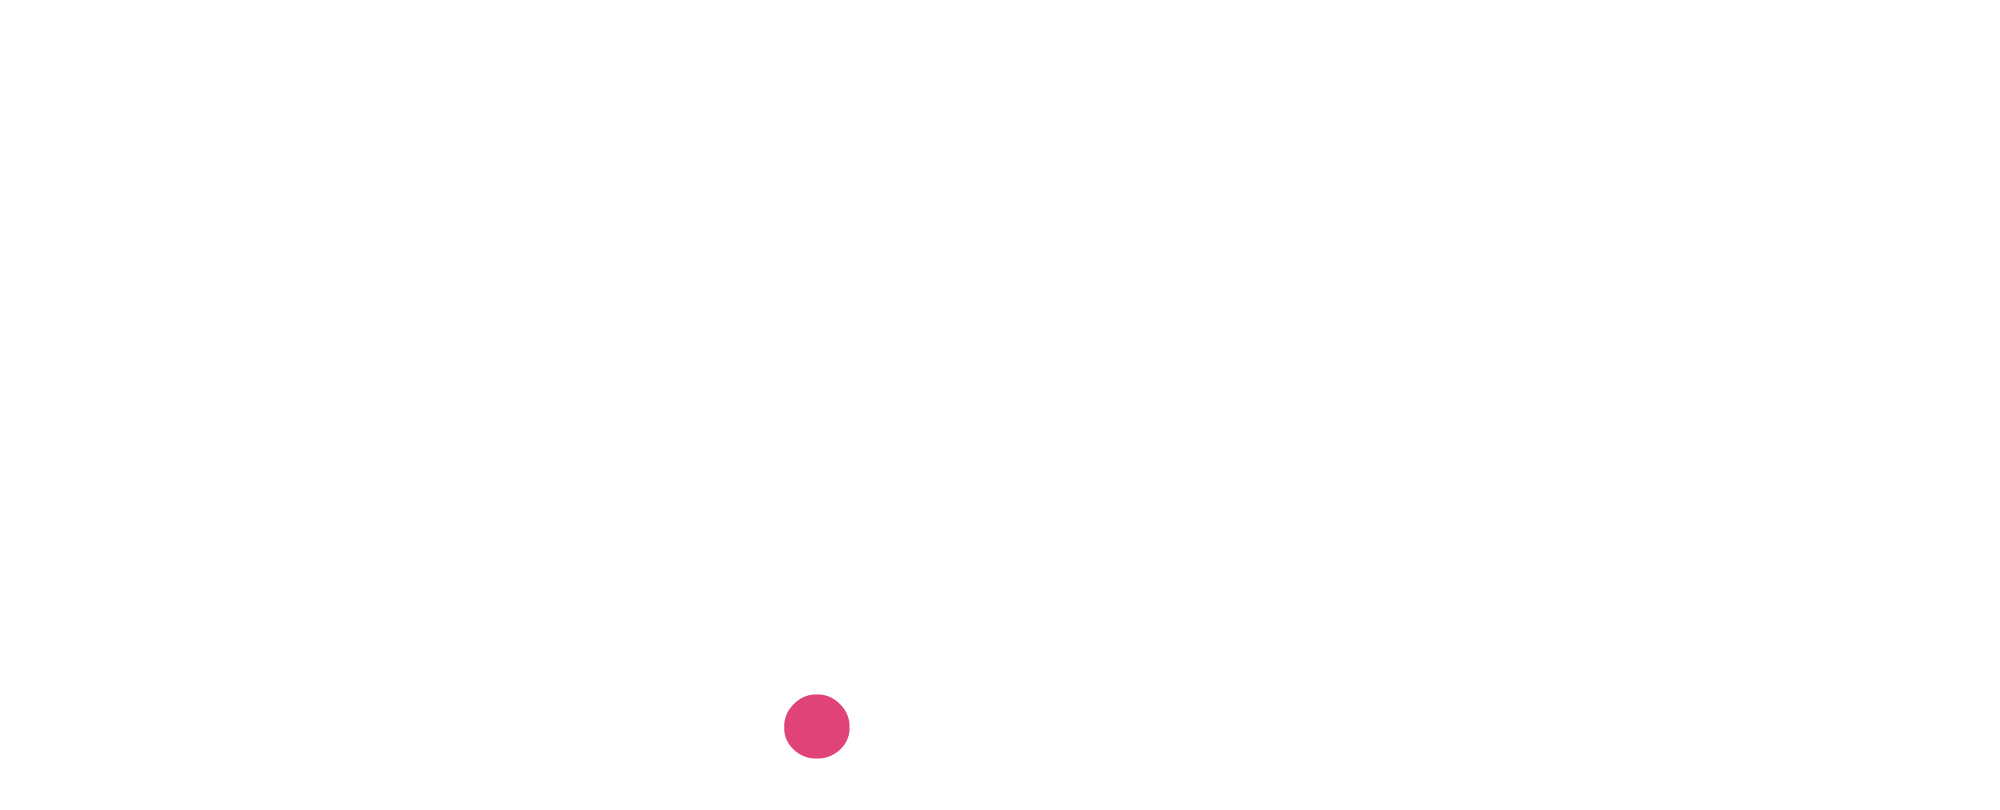 Agence web John-does creation logo